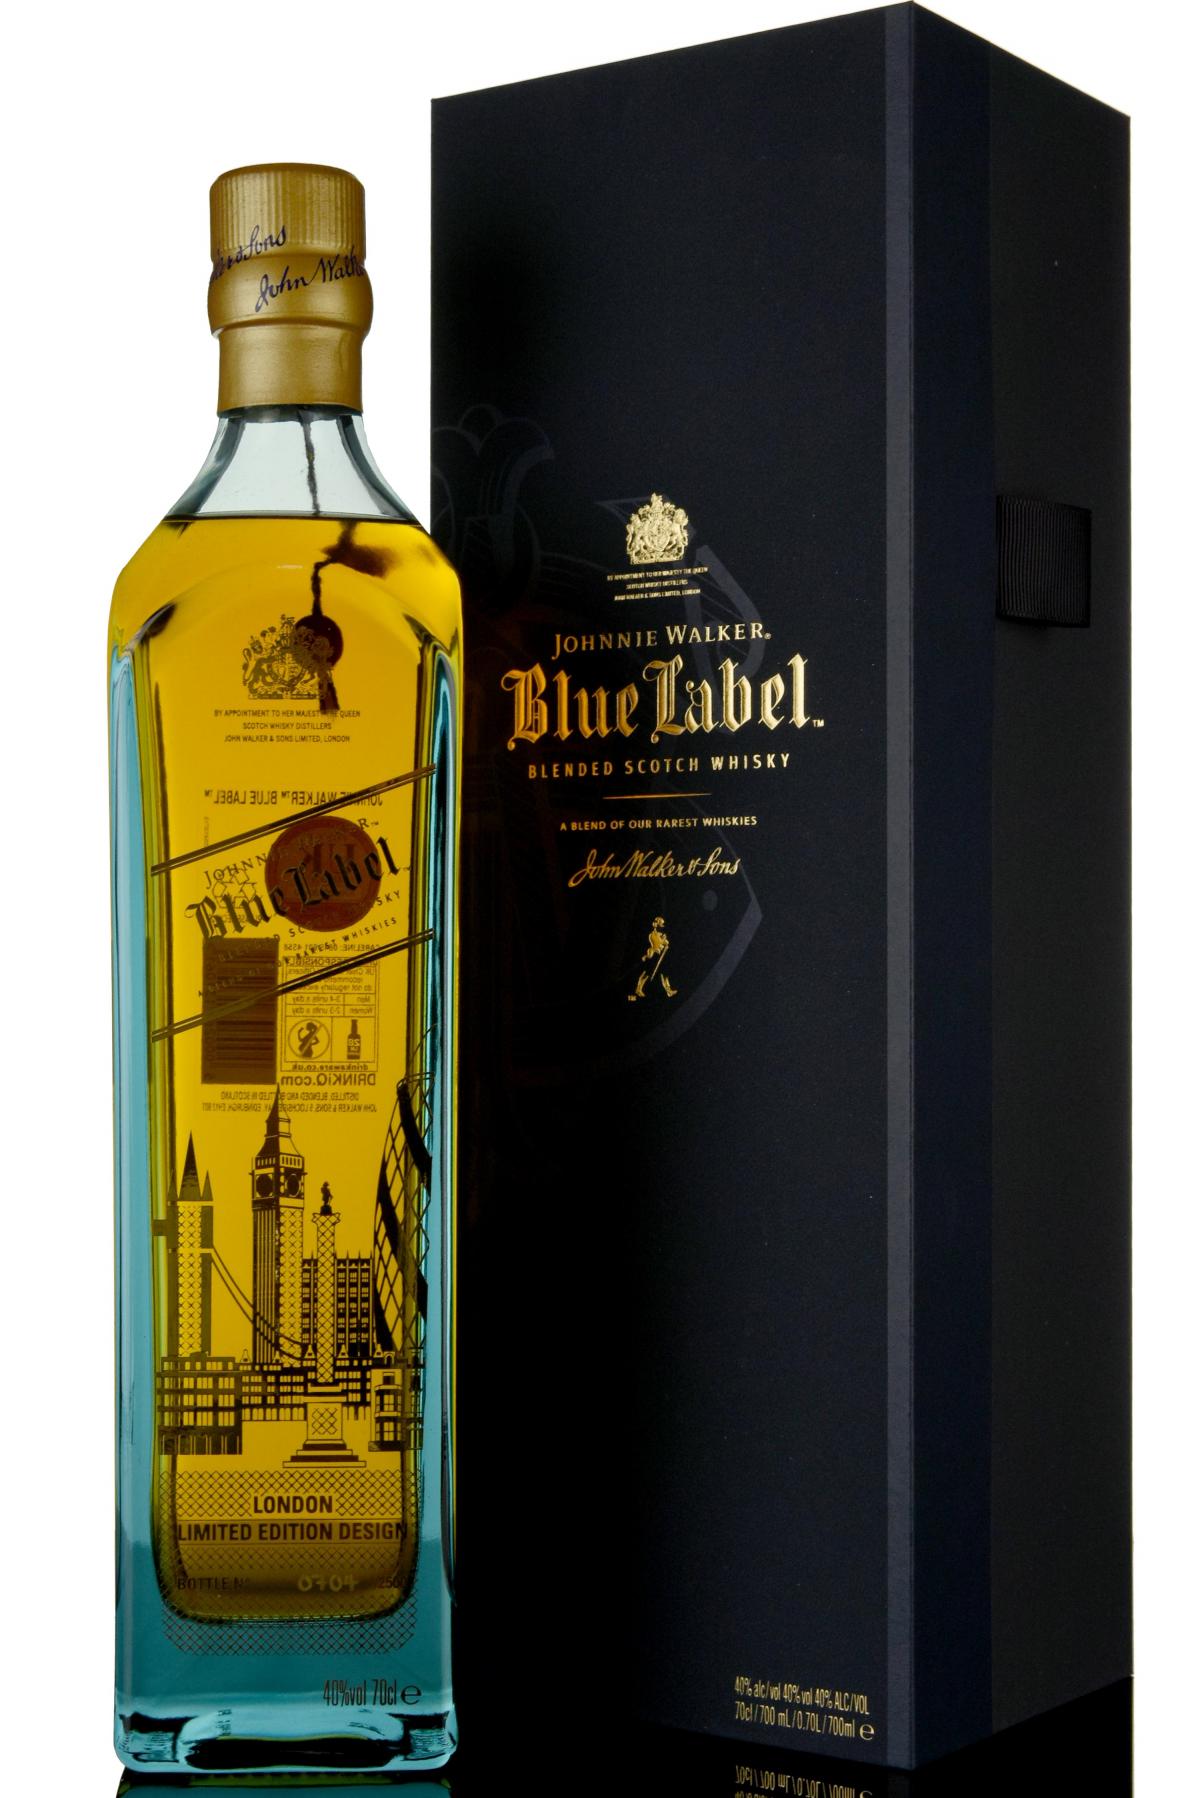 Johnnie Walker Blue Label - London Limited Edition Design